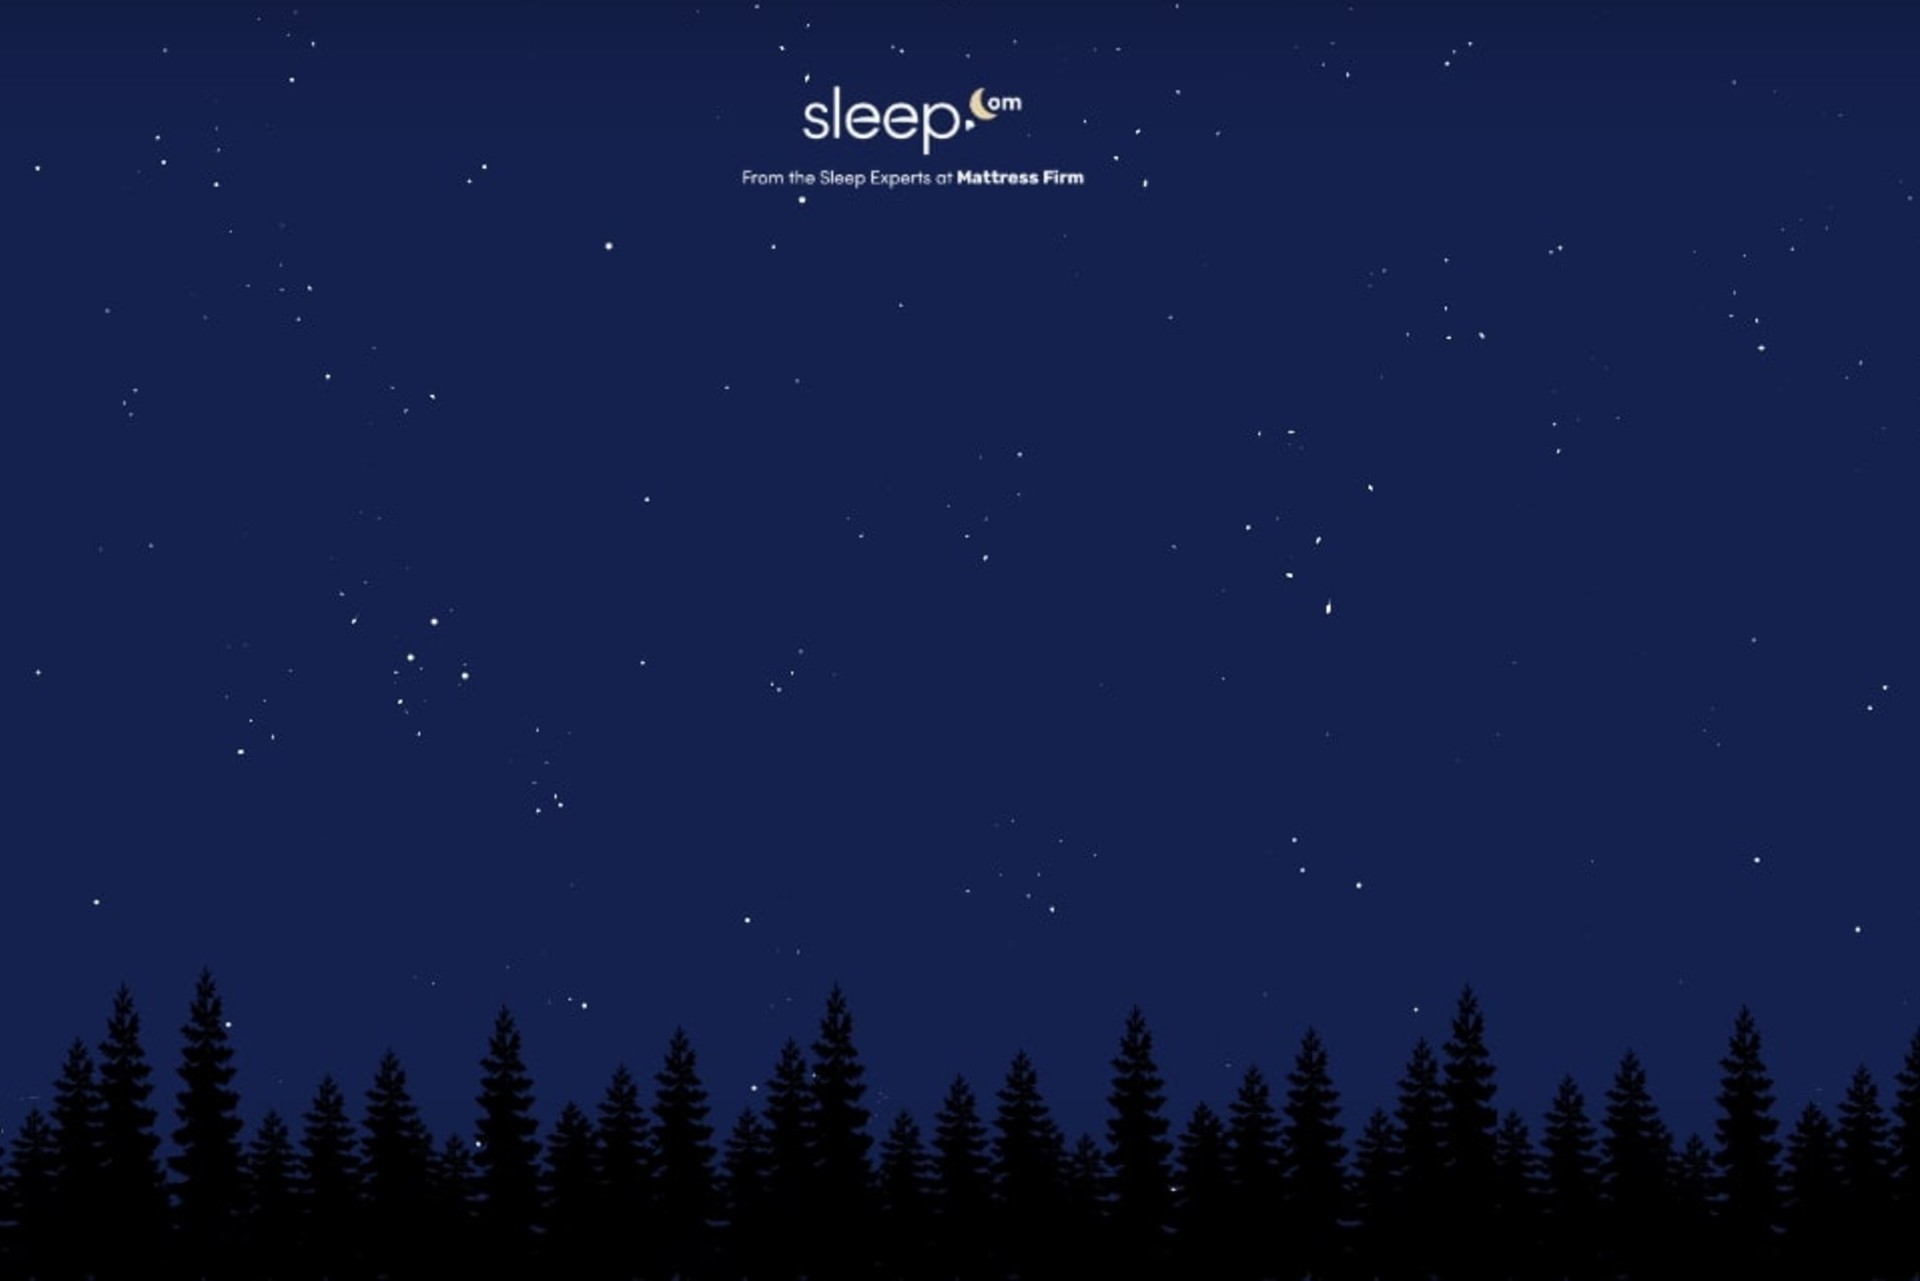 Sleep.com Brand Video